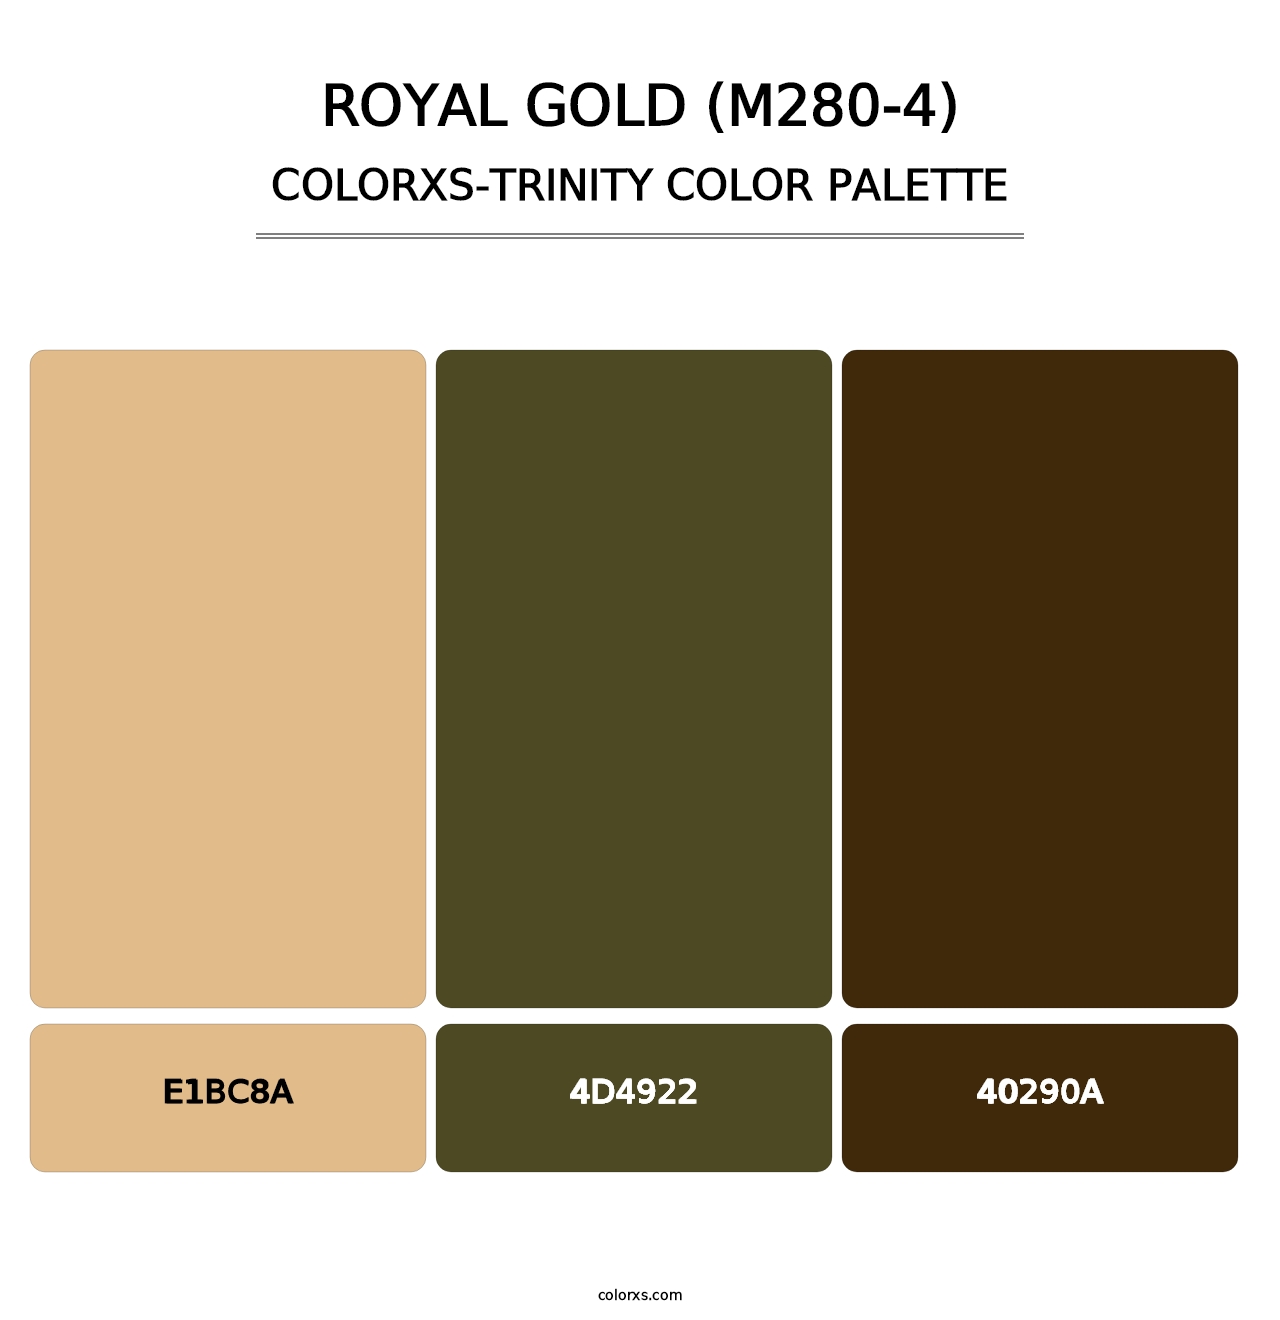 Royal Gold (M280-4) - Colorxs Trinity Palette